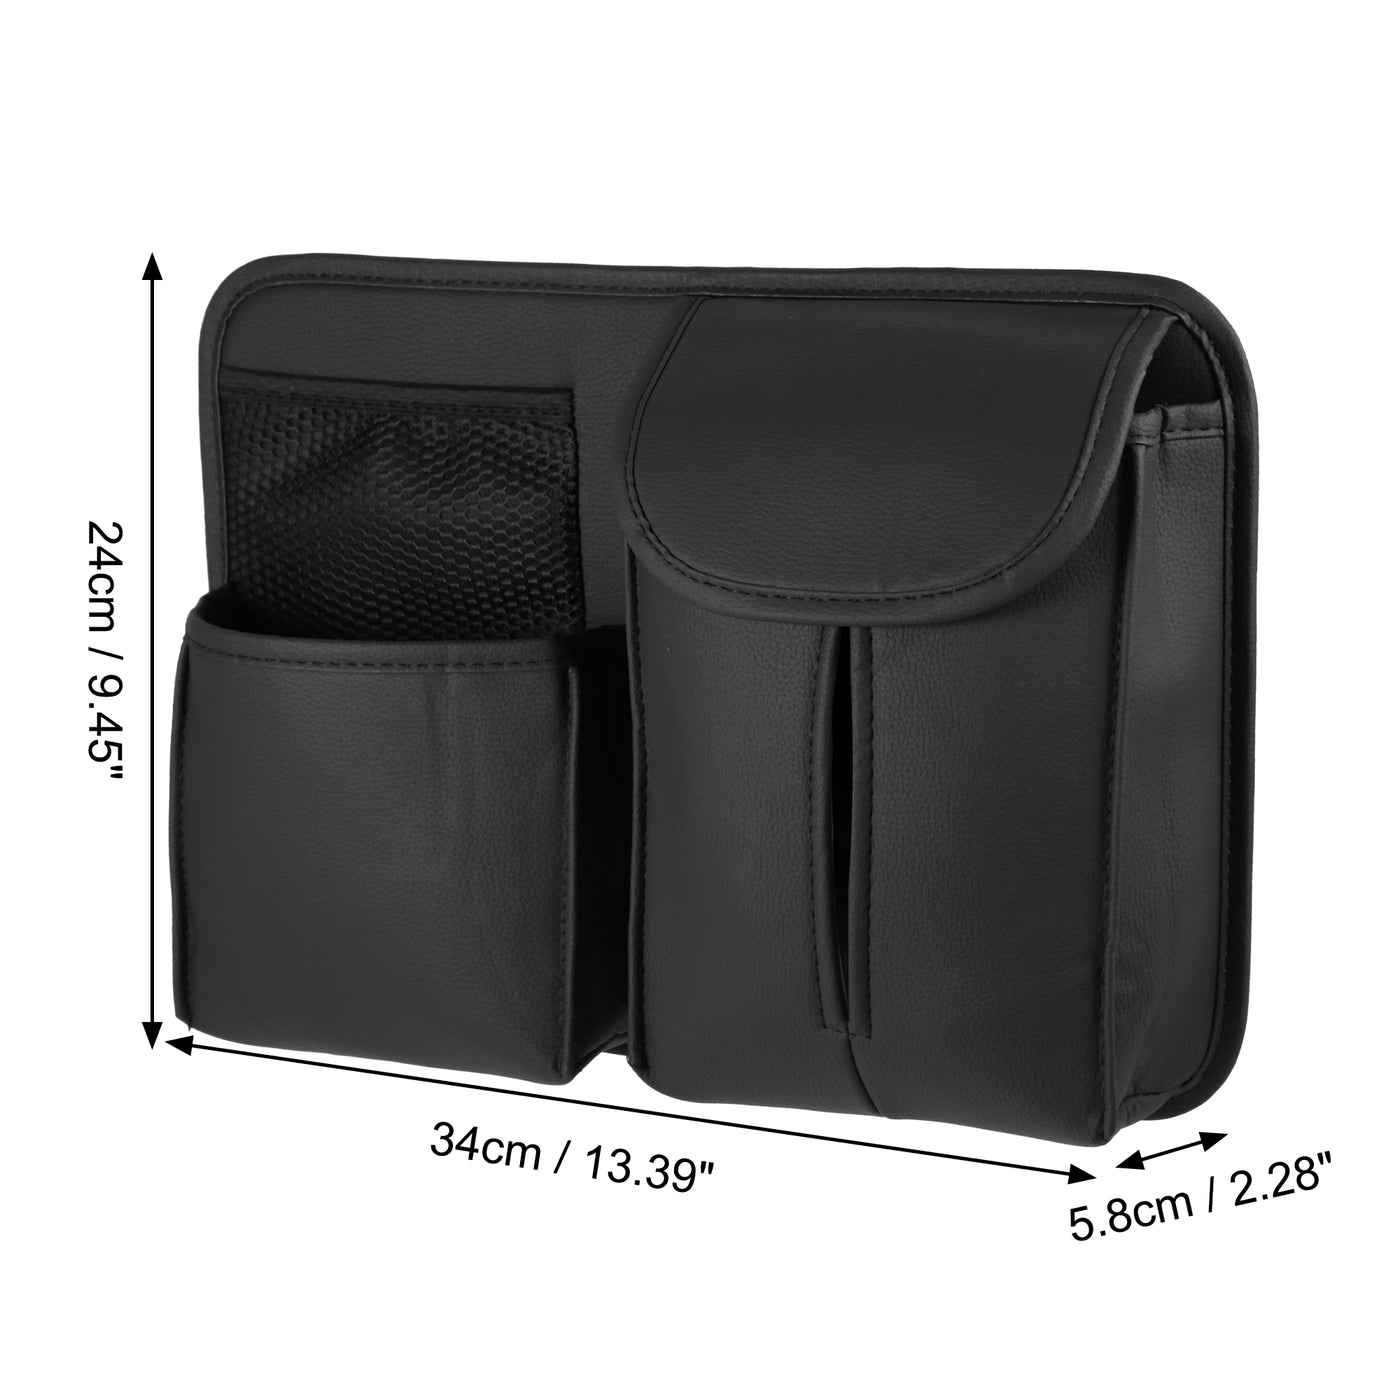 ACROPIX Car Seat Back Universal Car Back Seat Storage Bag Multi Pockets Organizer Black - Pack of 1